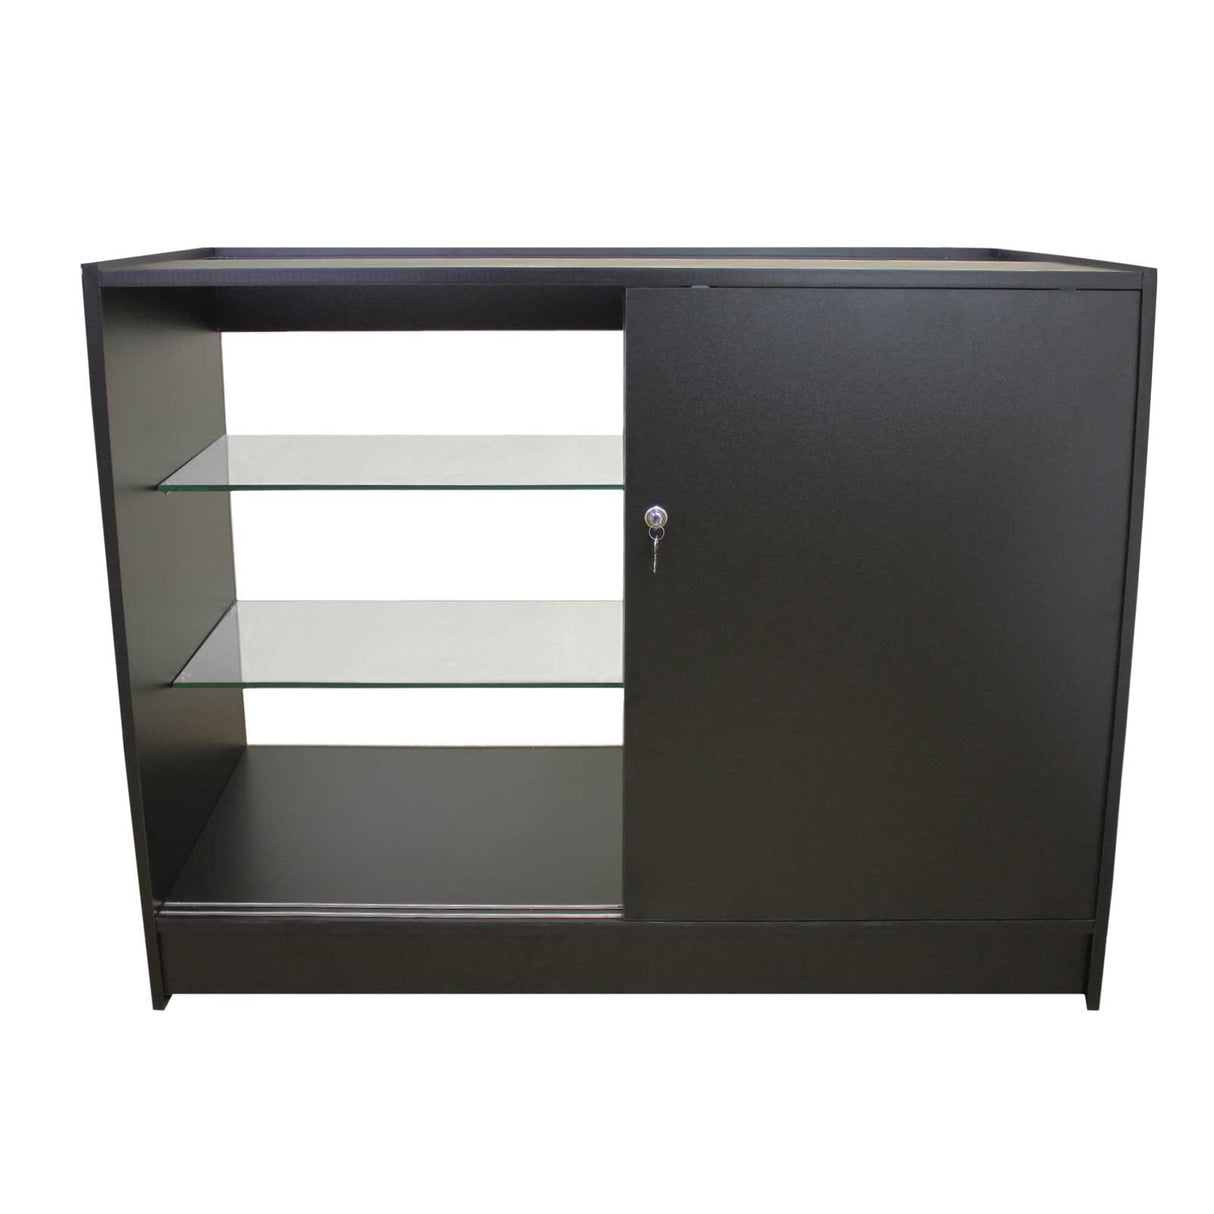 K1200 Retail Product Display Cabinet - Black